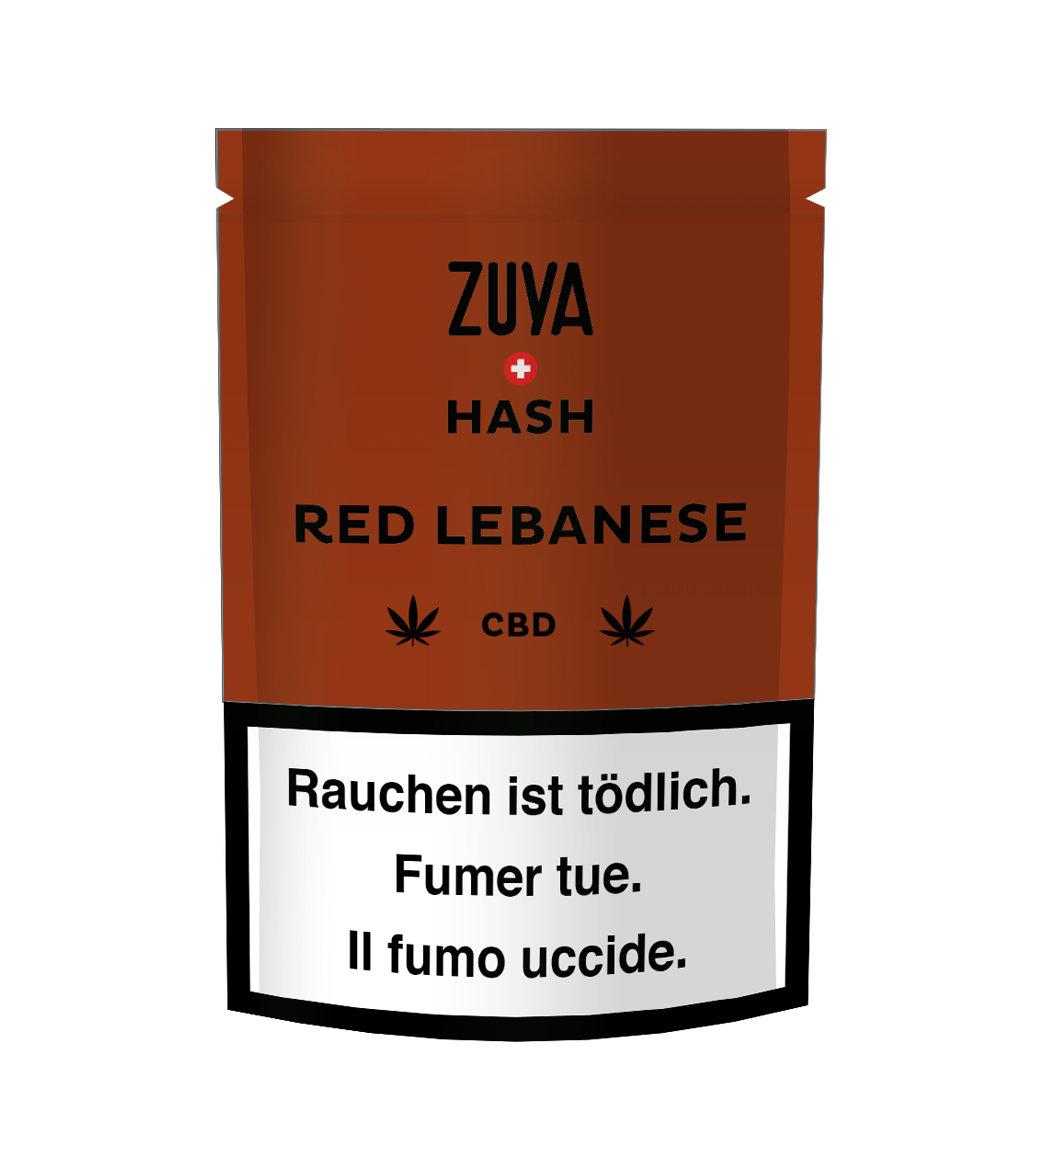 ZUYA Hash RED LEBANESE “on the go” - 2g